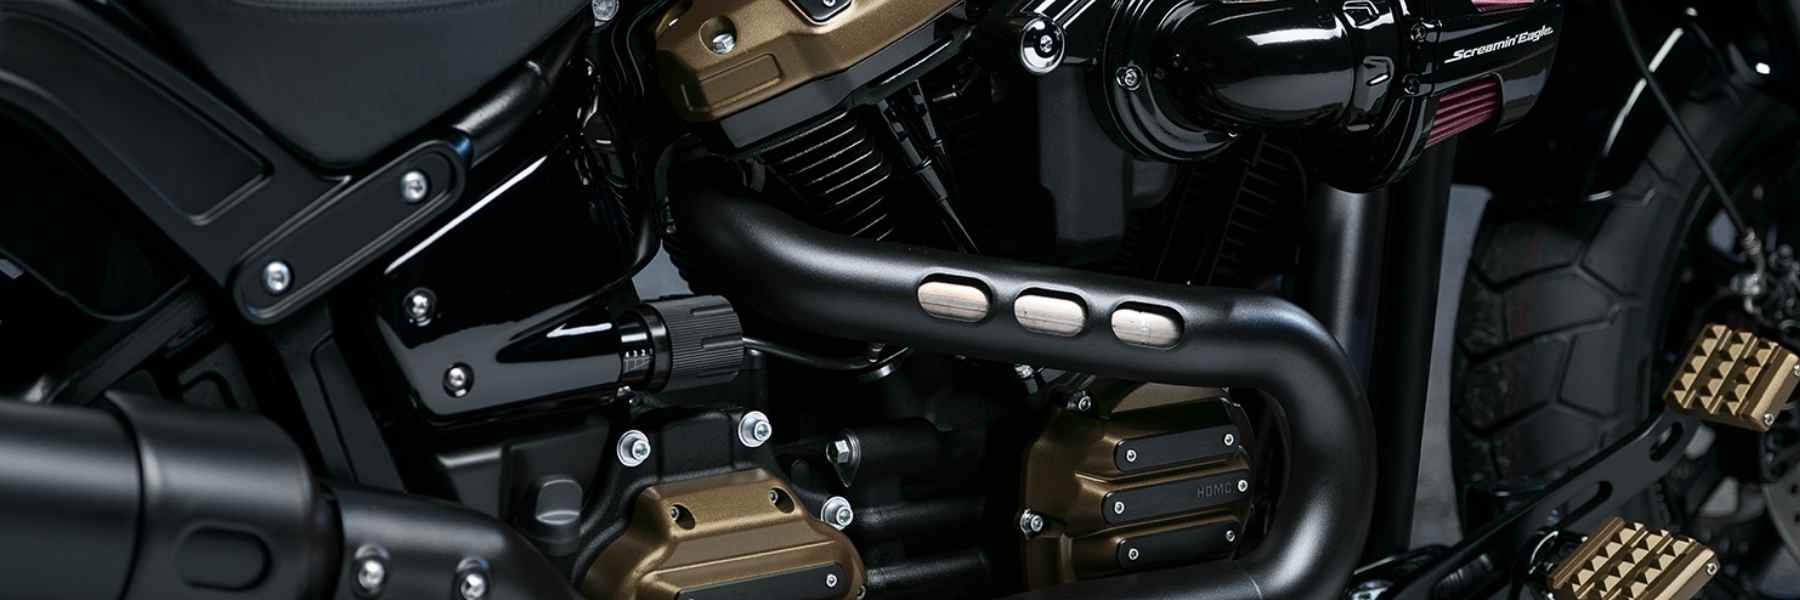 BLACK_FRIDAY_PARTS_1800_x_800_px_1800_x_600_px-Rolling Thunder Harley-Davidson